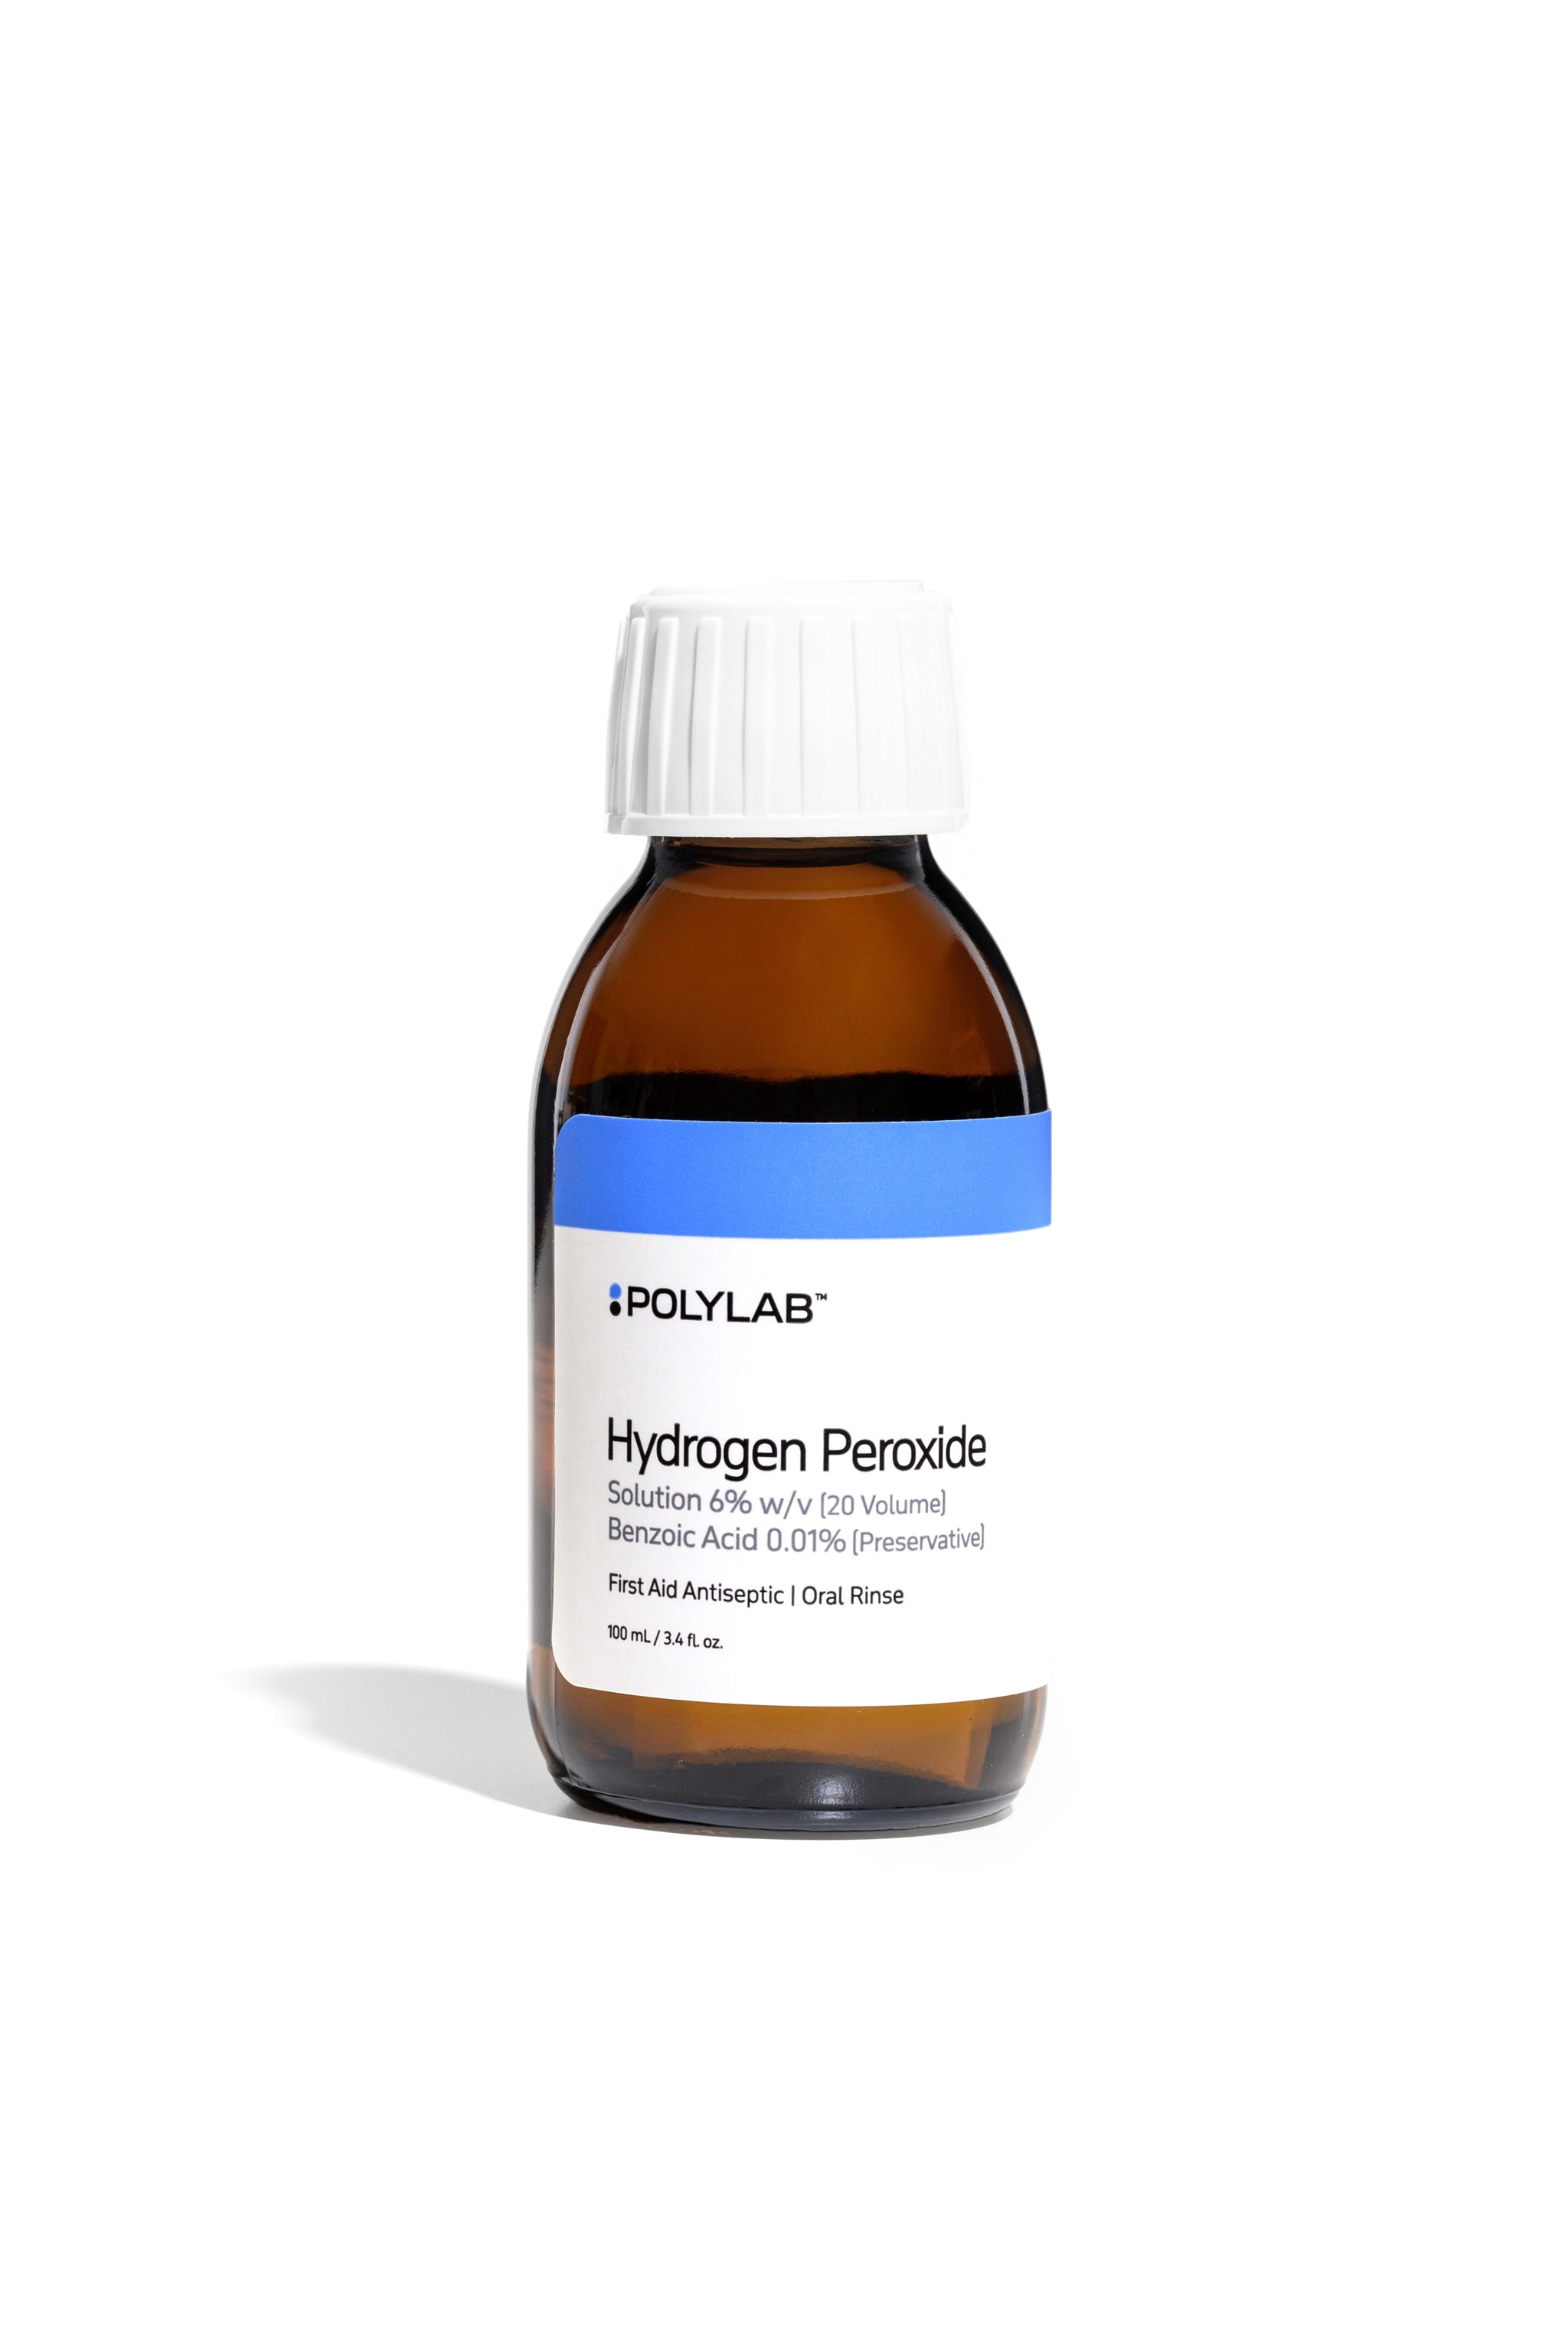 Hydrogen Peroxide (20 volume) 6% w/v